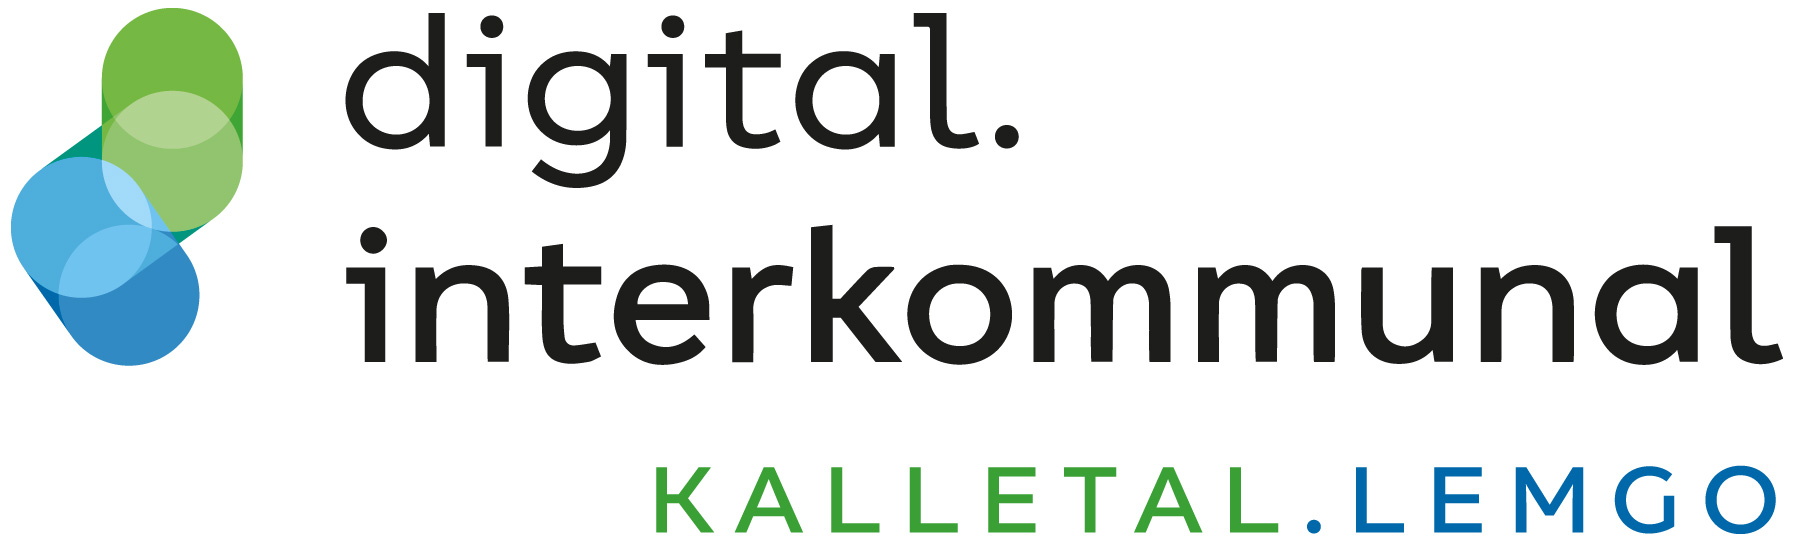 digital.interkommunal | Stadt Lemgo & Gemeinde Kalletal